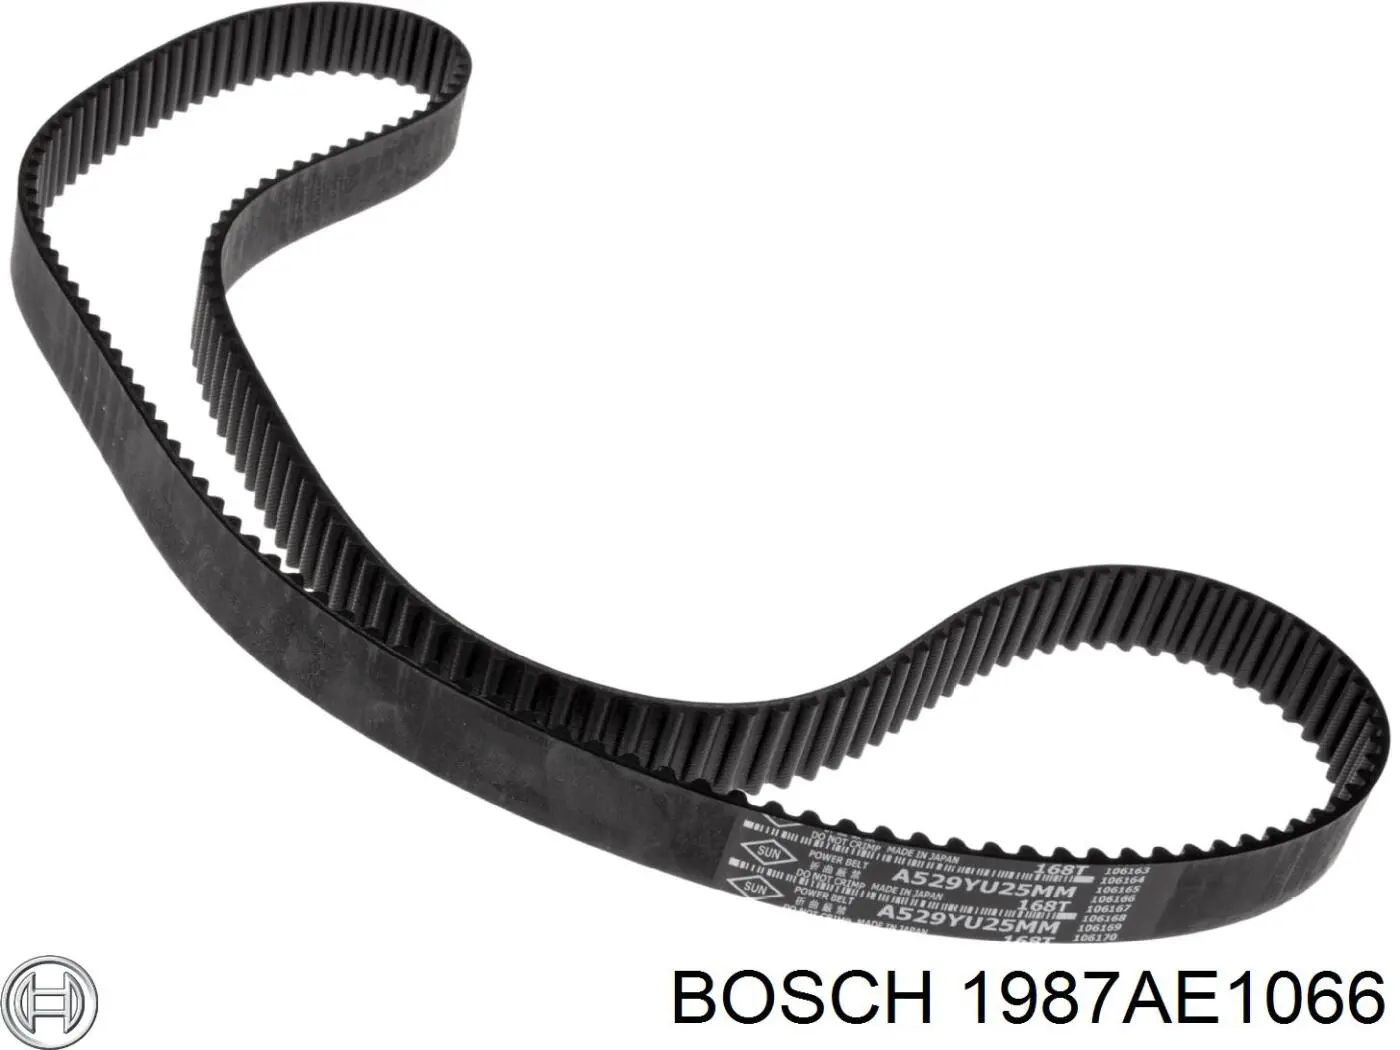 1987AE1066 Bosch correa distribucion